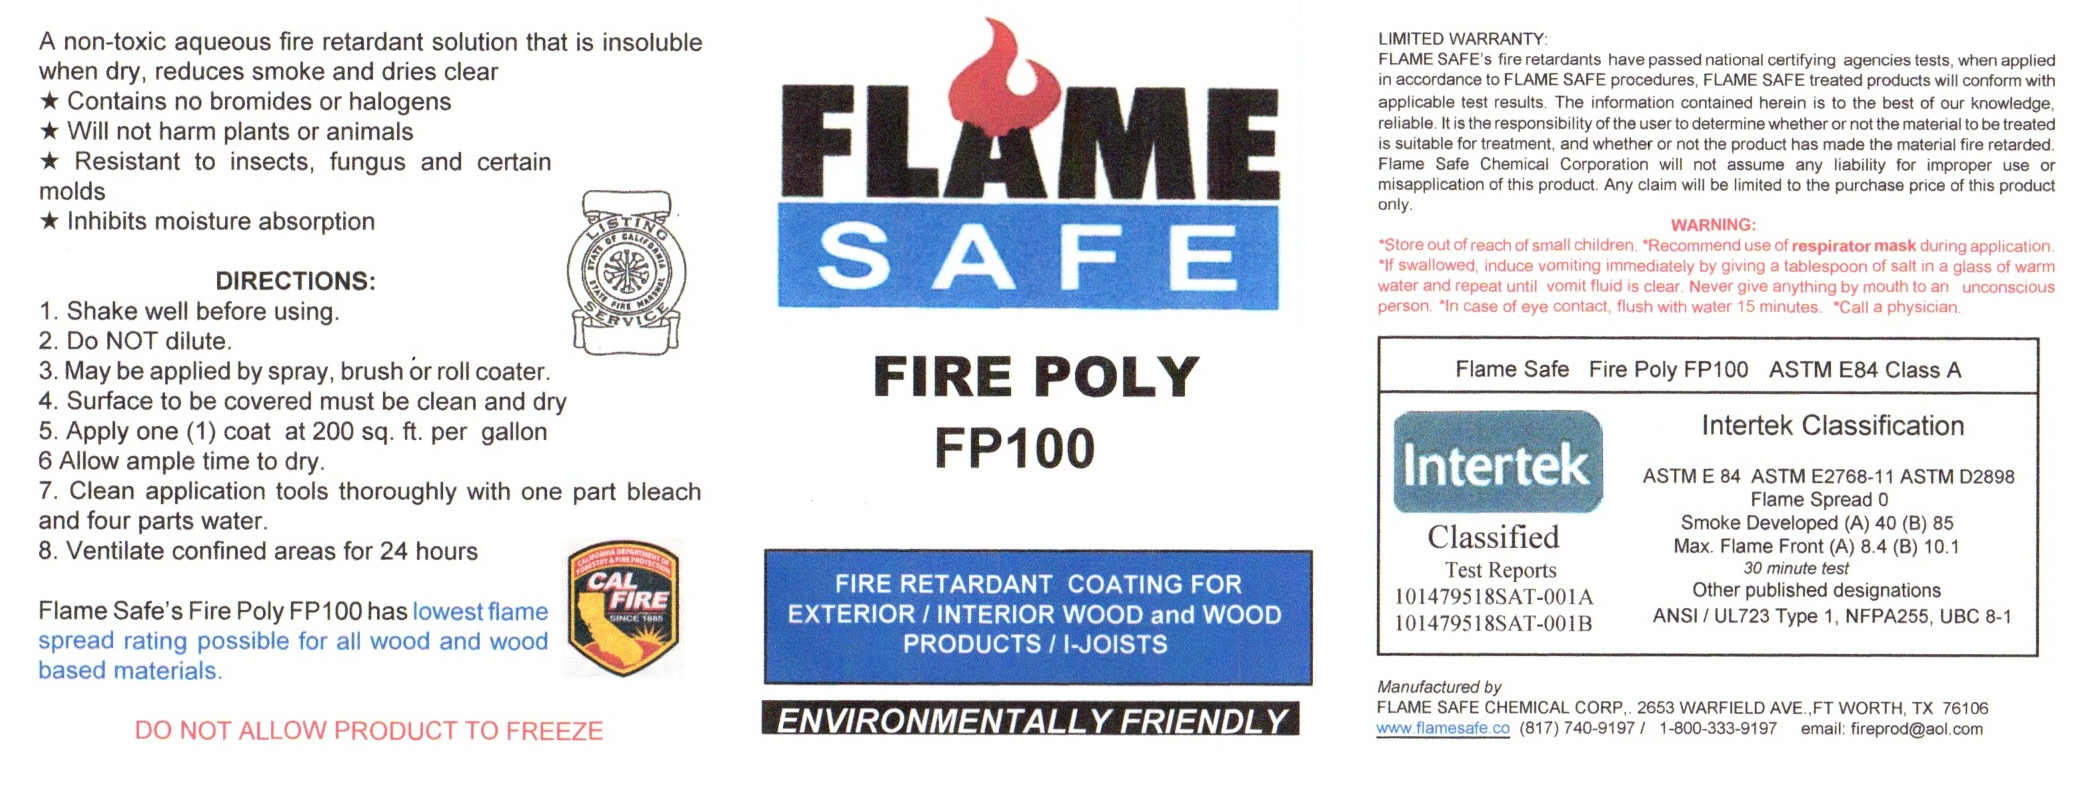 Fire Poly FP100 fire retardant label